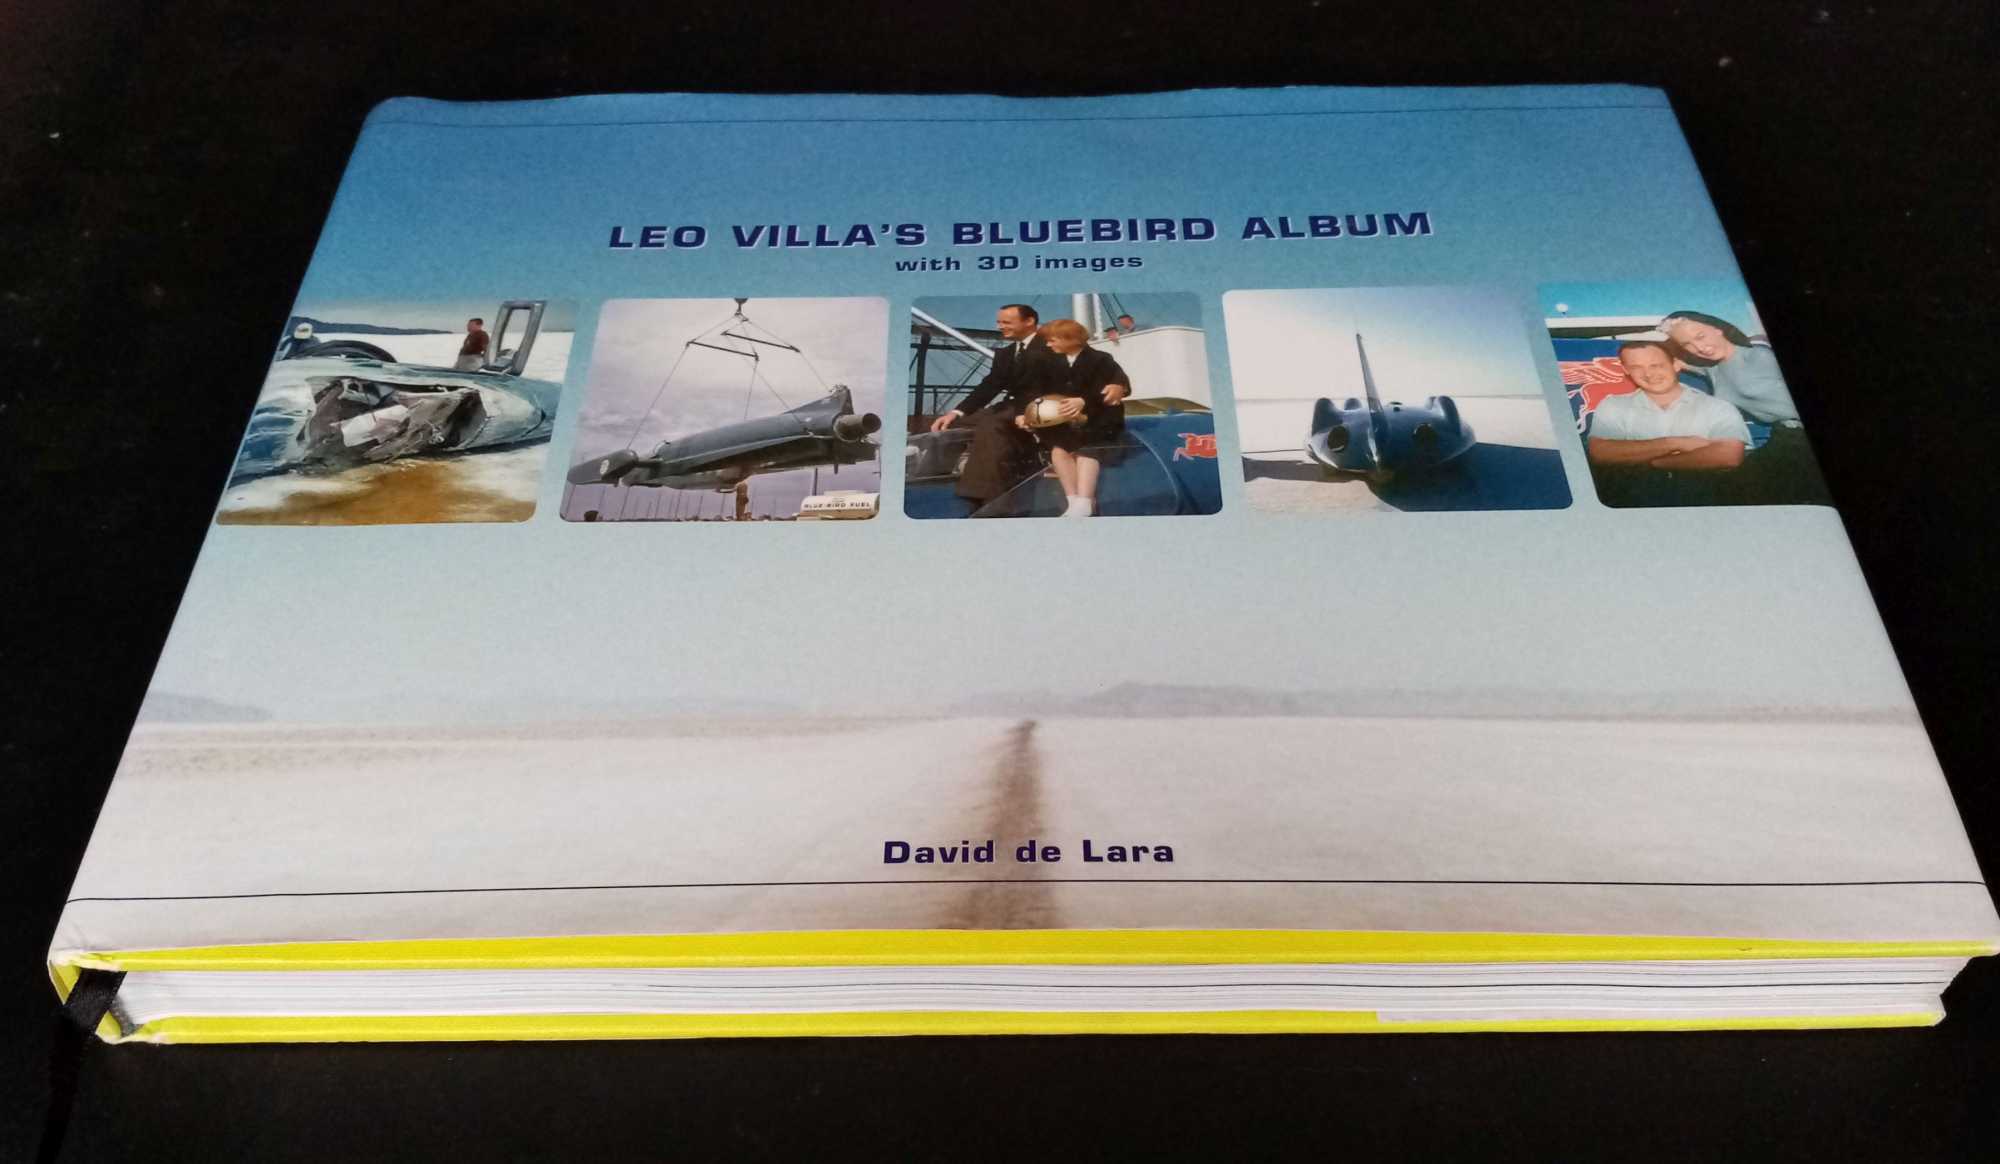 David de Lara - Leo Villa's Bluebird Album